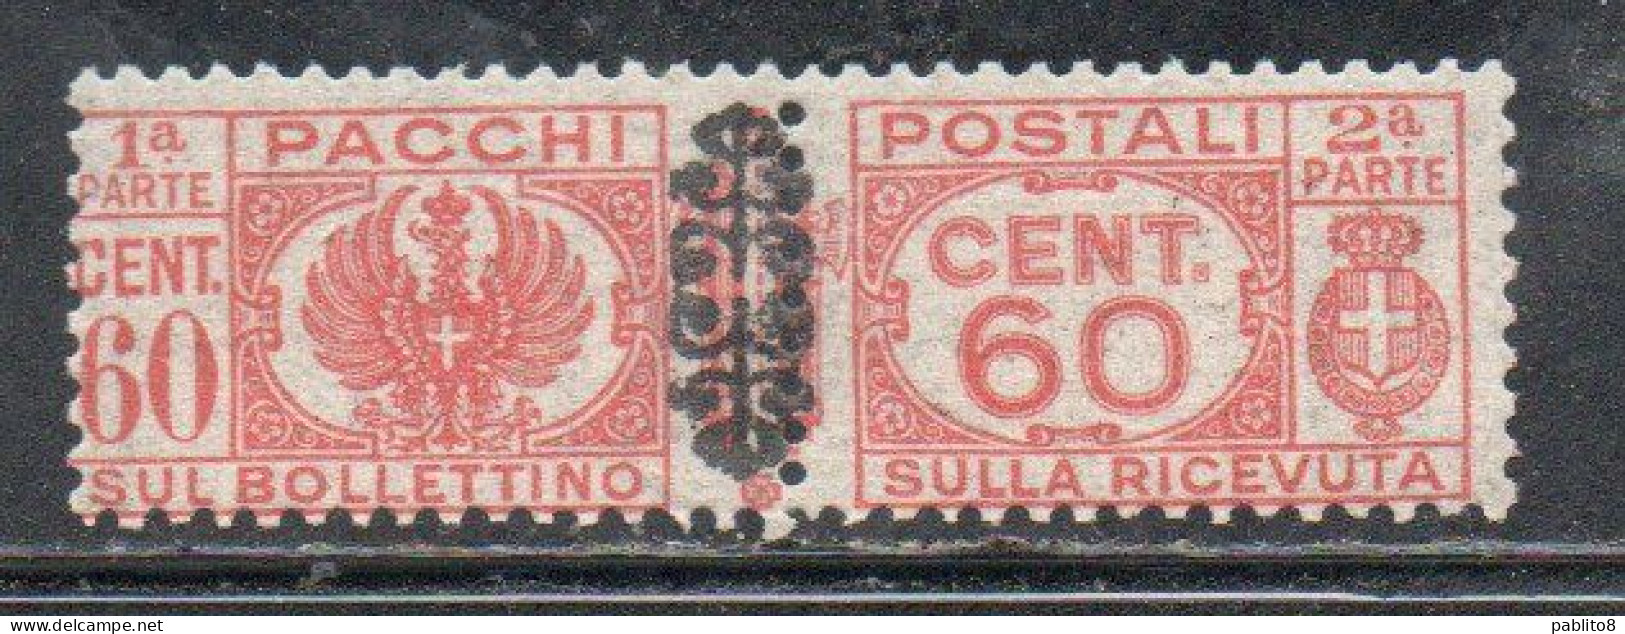 ITALIA REGNO ITALY KINGDOM 1945 LUOGOTENENZA PACCHI POSTALI PARCEL POST FREGIO CENT 60c MNH - Postal Parcels